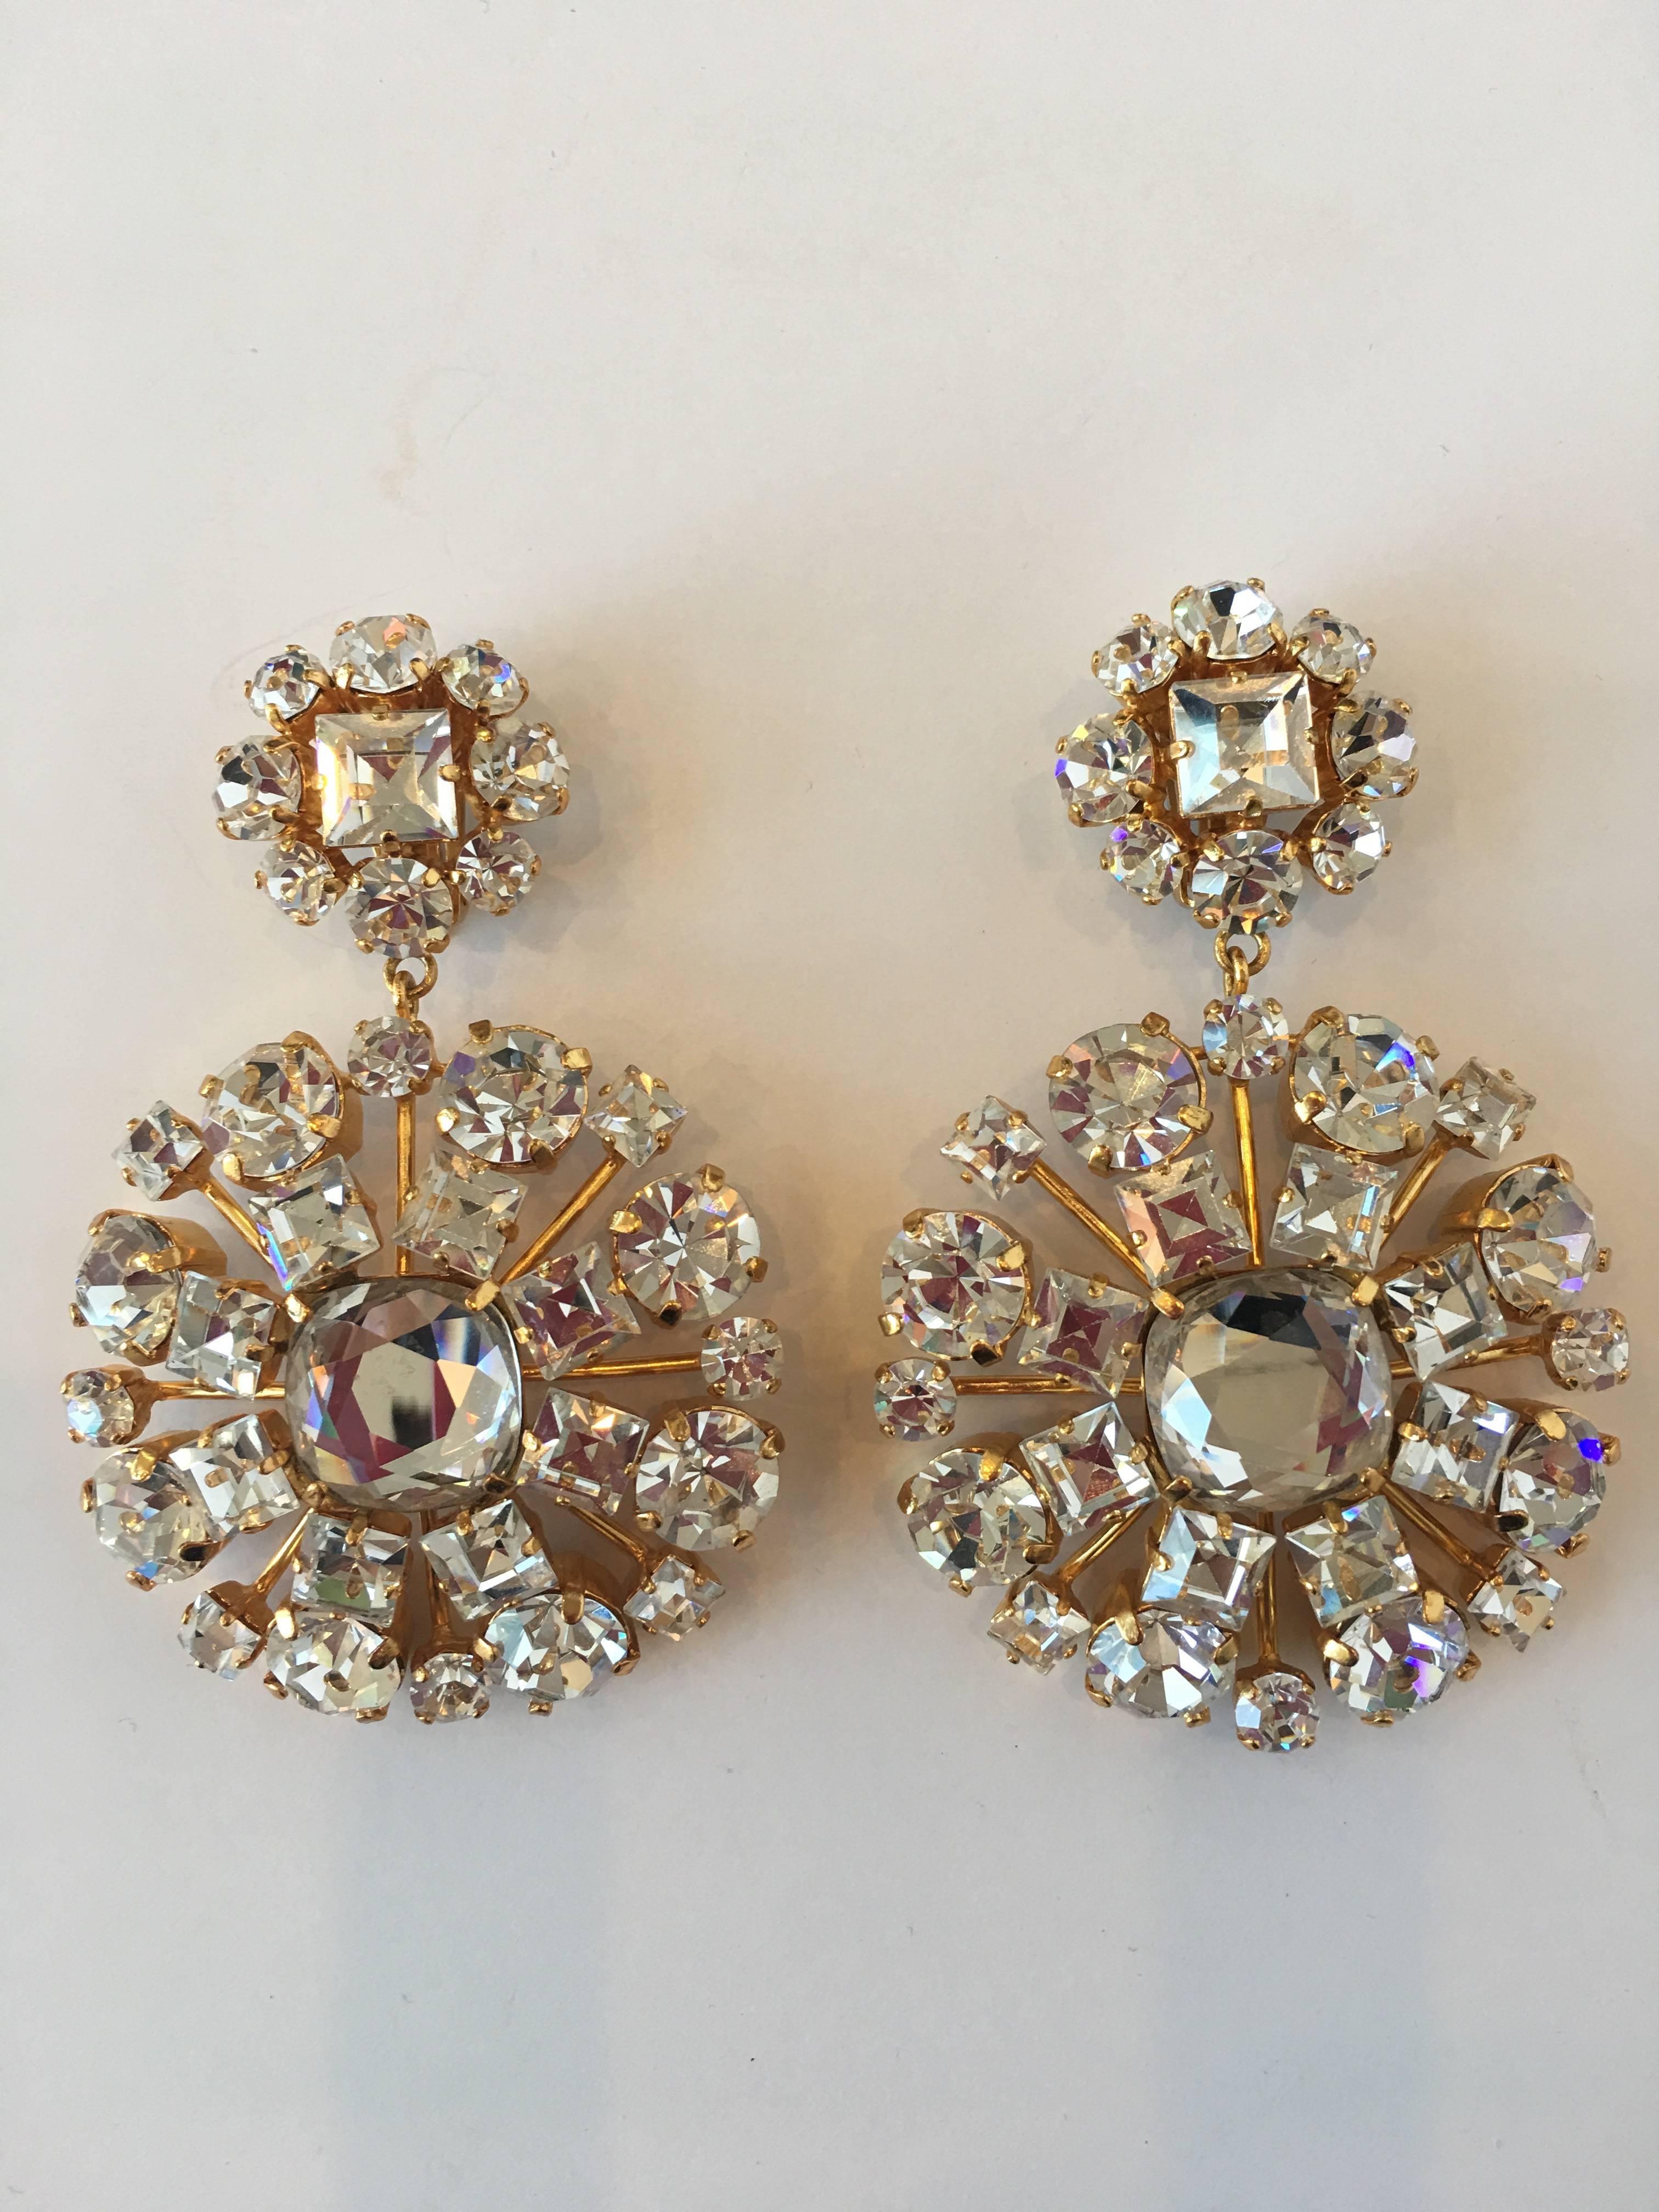 1980s Yves Saint Laurent Large Crystal & Gold Tone Drop Clip Earrings

Measurements:
Length: 3.25